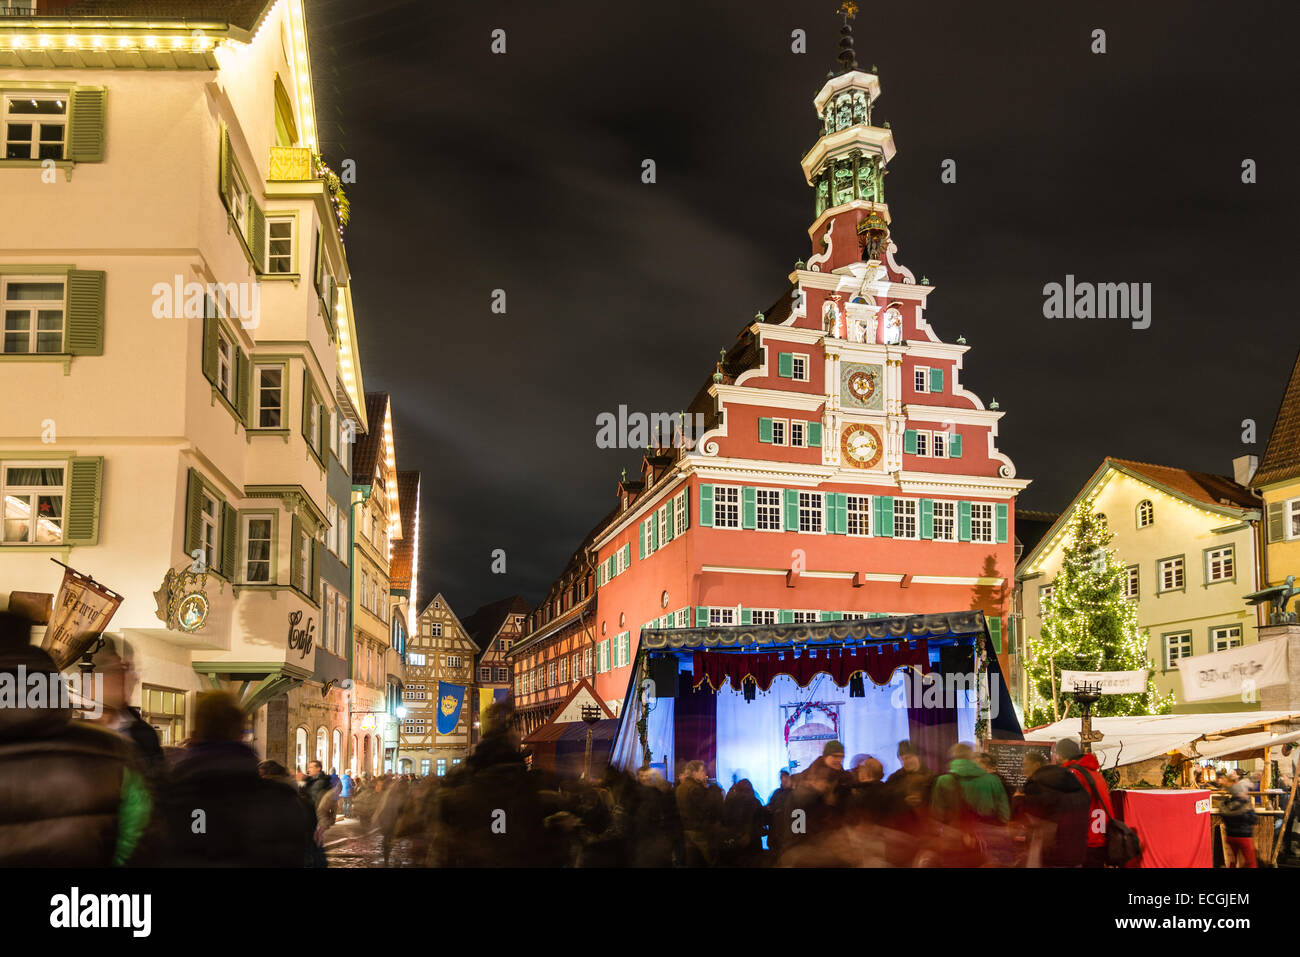 ESSLINGEN, GERMANY - DECEMBER 11, 2014: People are visiting the Christmas Market at night on December 11, 2014 in Esslingen, Ger Stock Photo